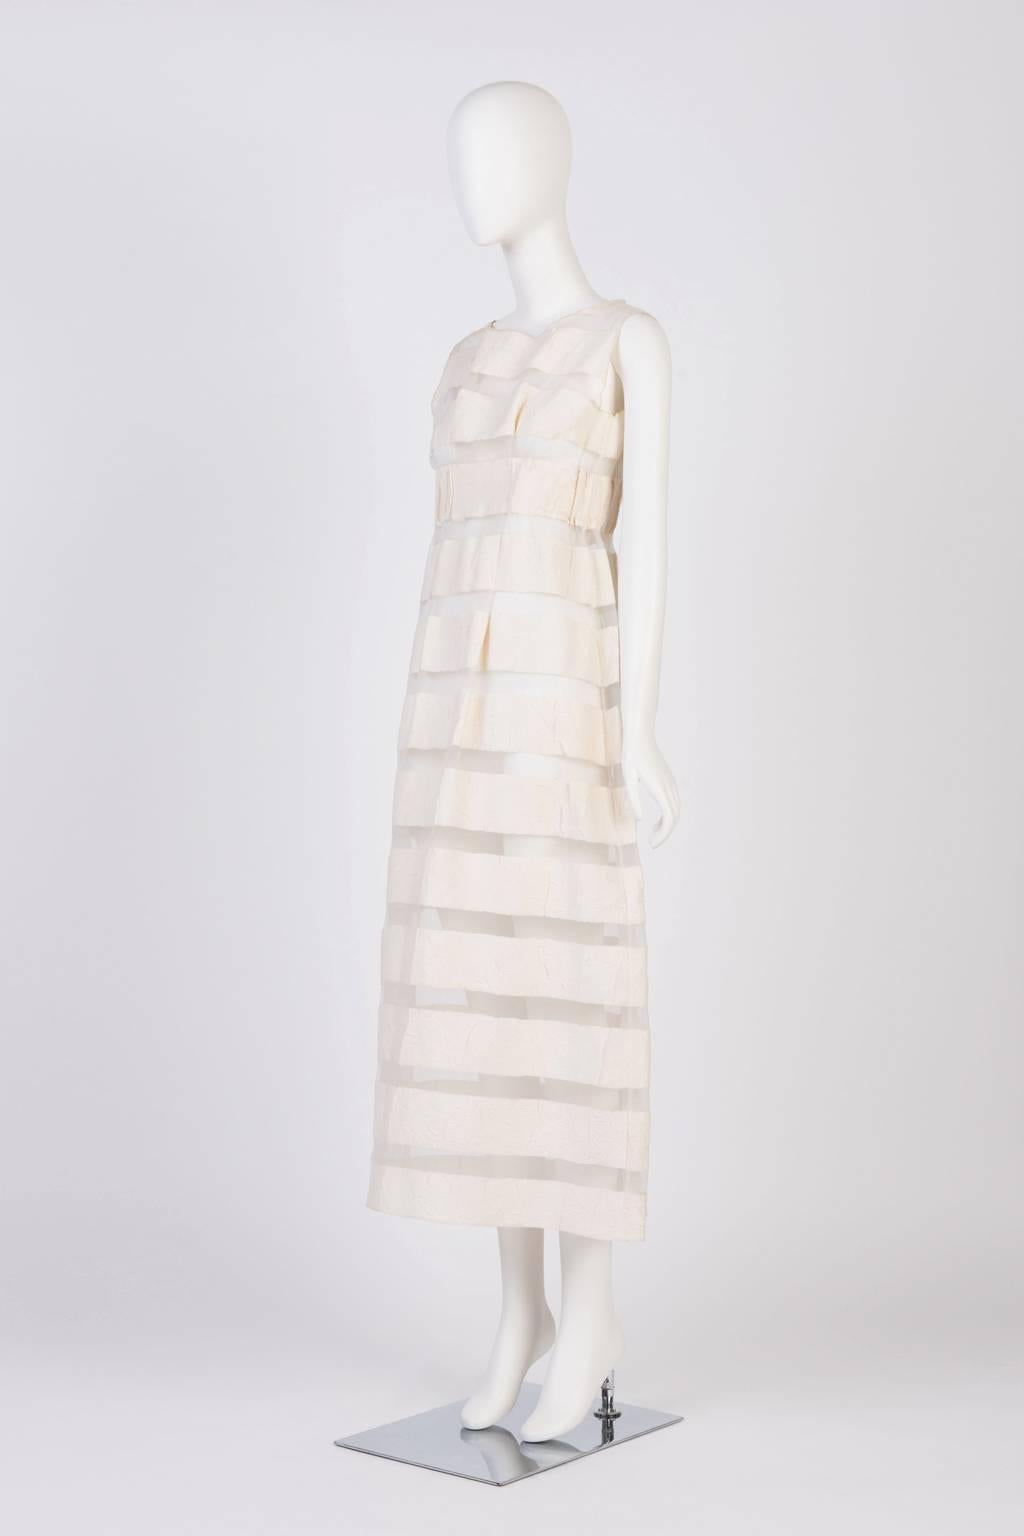 Sleeveless, eslaticated empire waist transparent dress with cotton stripes.